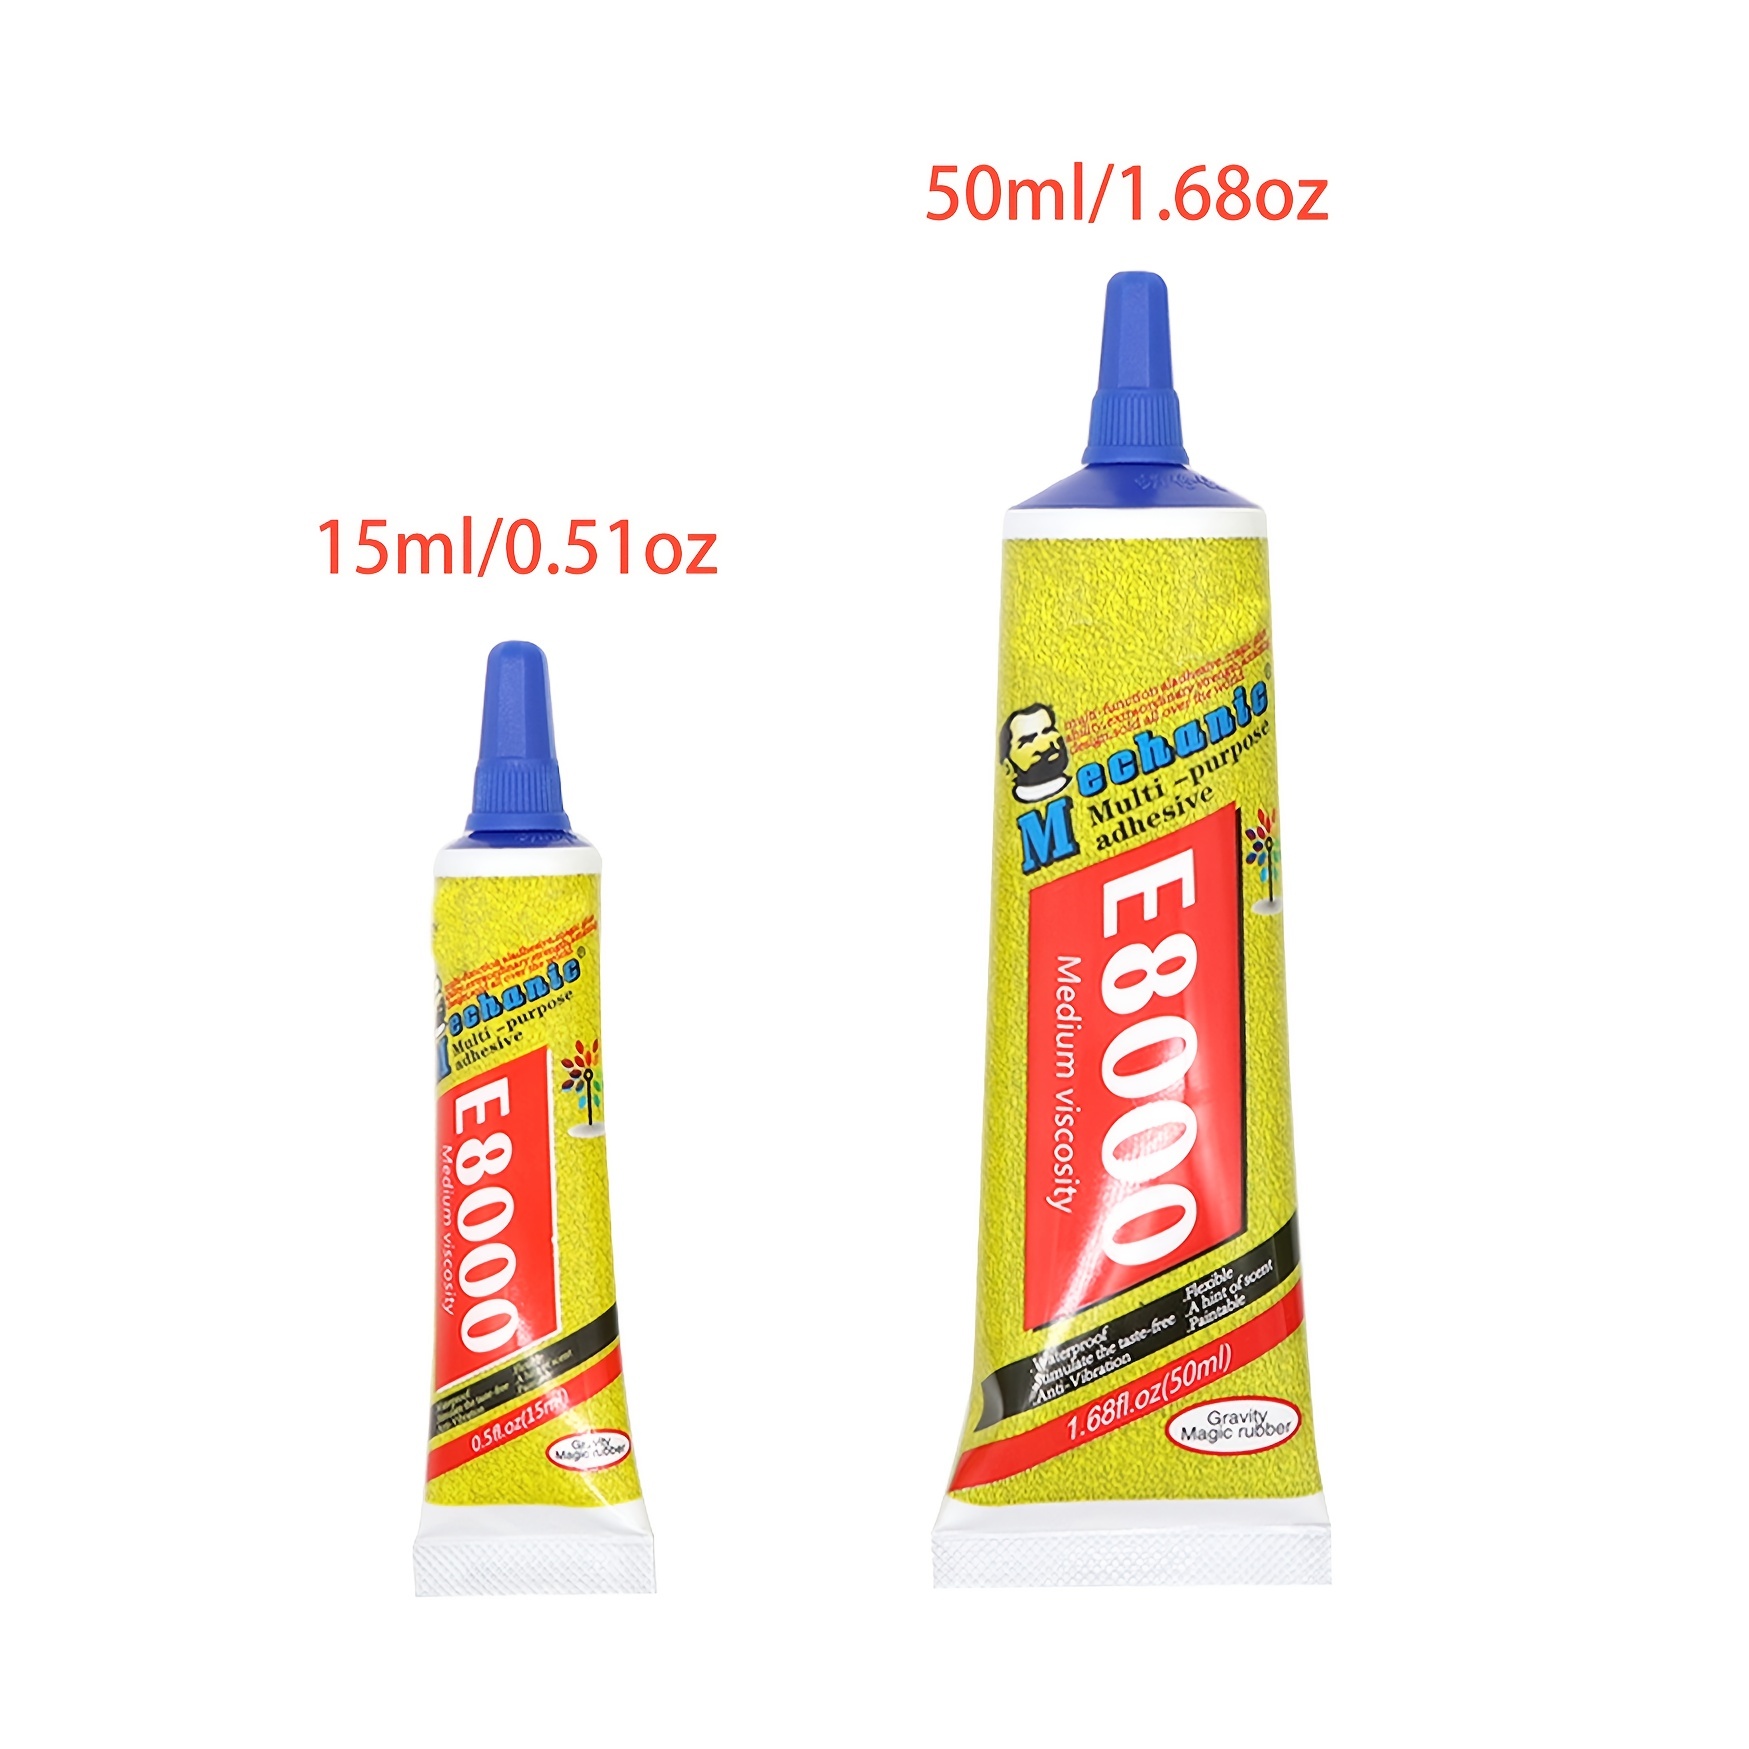 Replacement Multi-Purpose Glue Adhesive E8000 (110ml / Suxun), Other